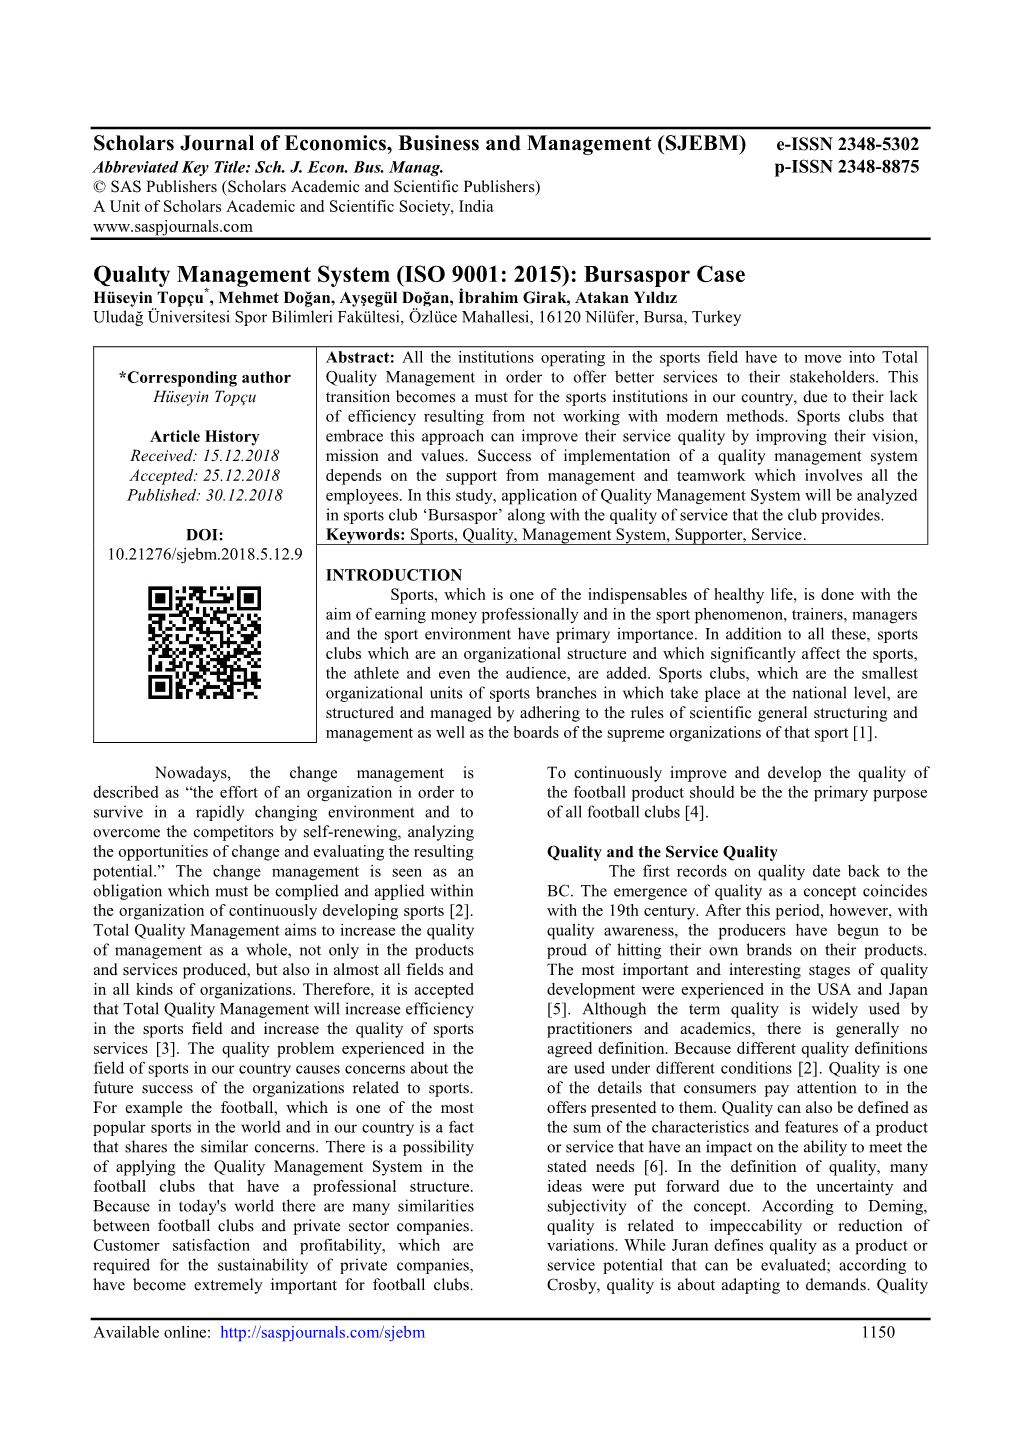 Qualıty Management System (ISO 9001: 2015): Bursaspor Case